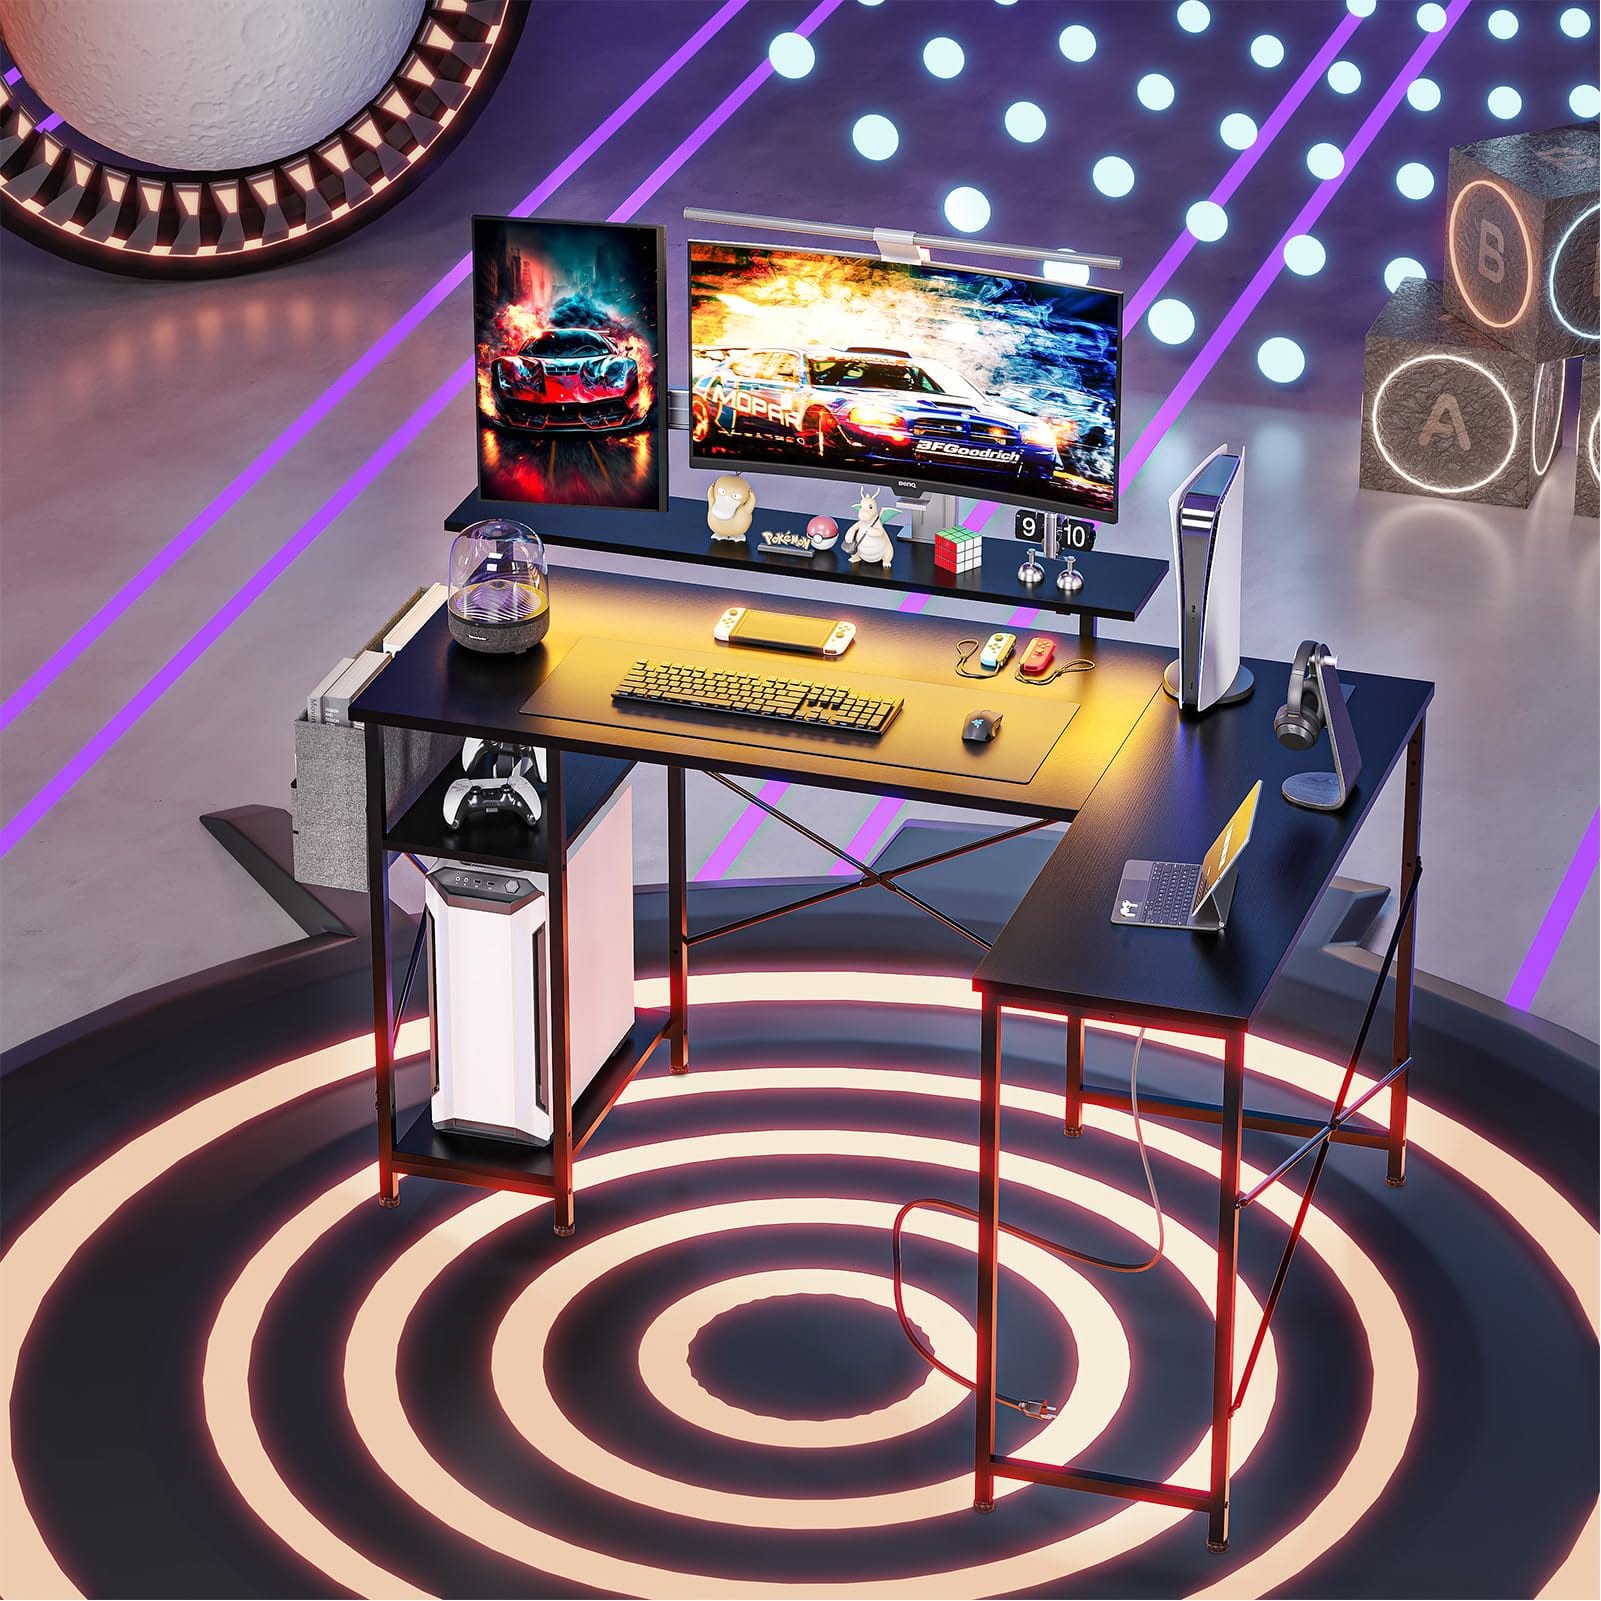 54" L-Shaped Gaming Desk with Power Outlet & LED Light, Black